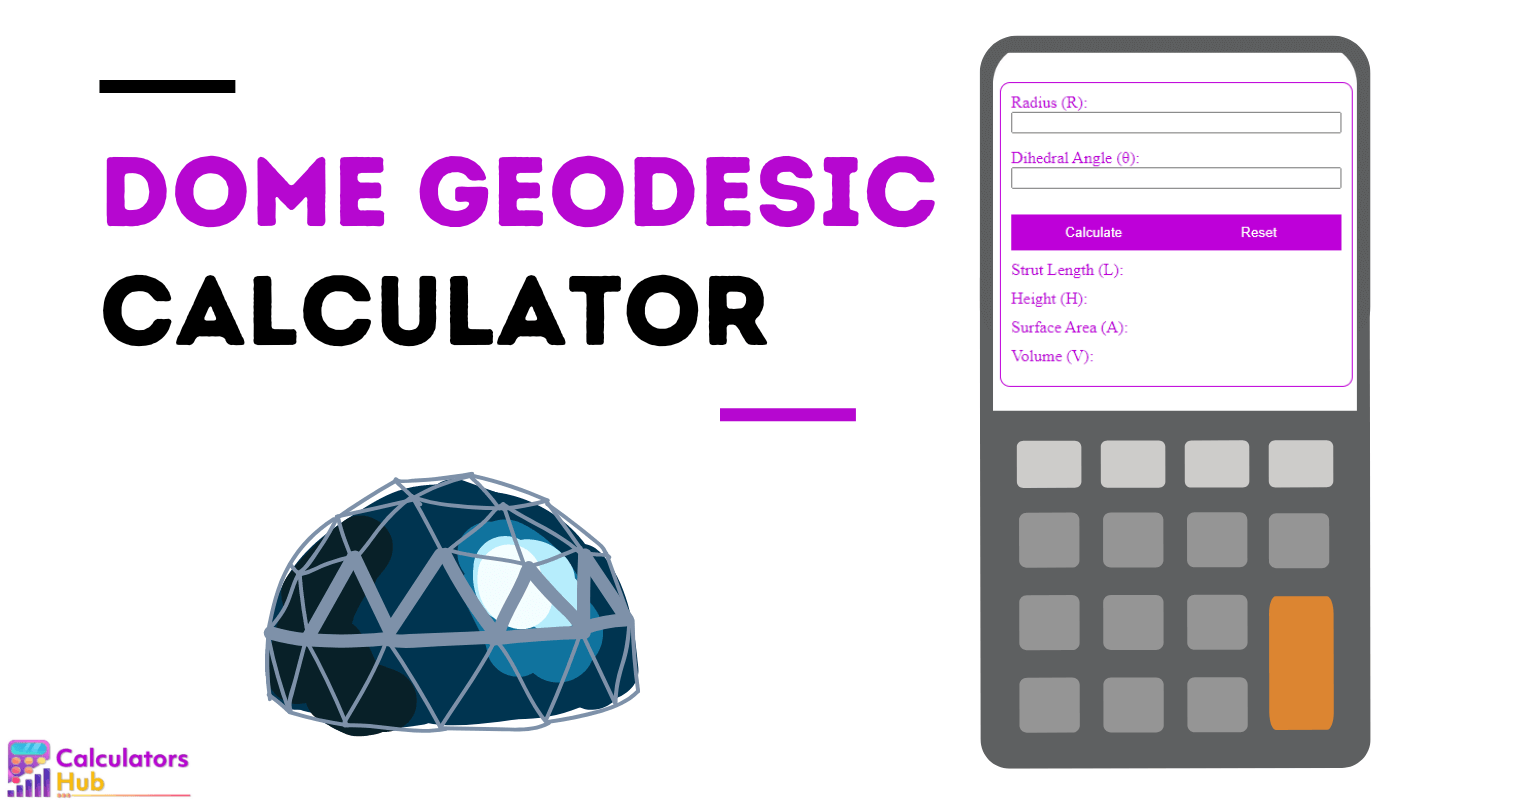 Dome Geodesic Calculator